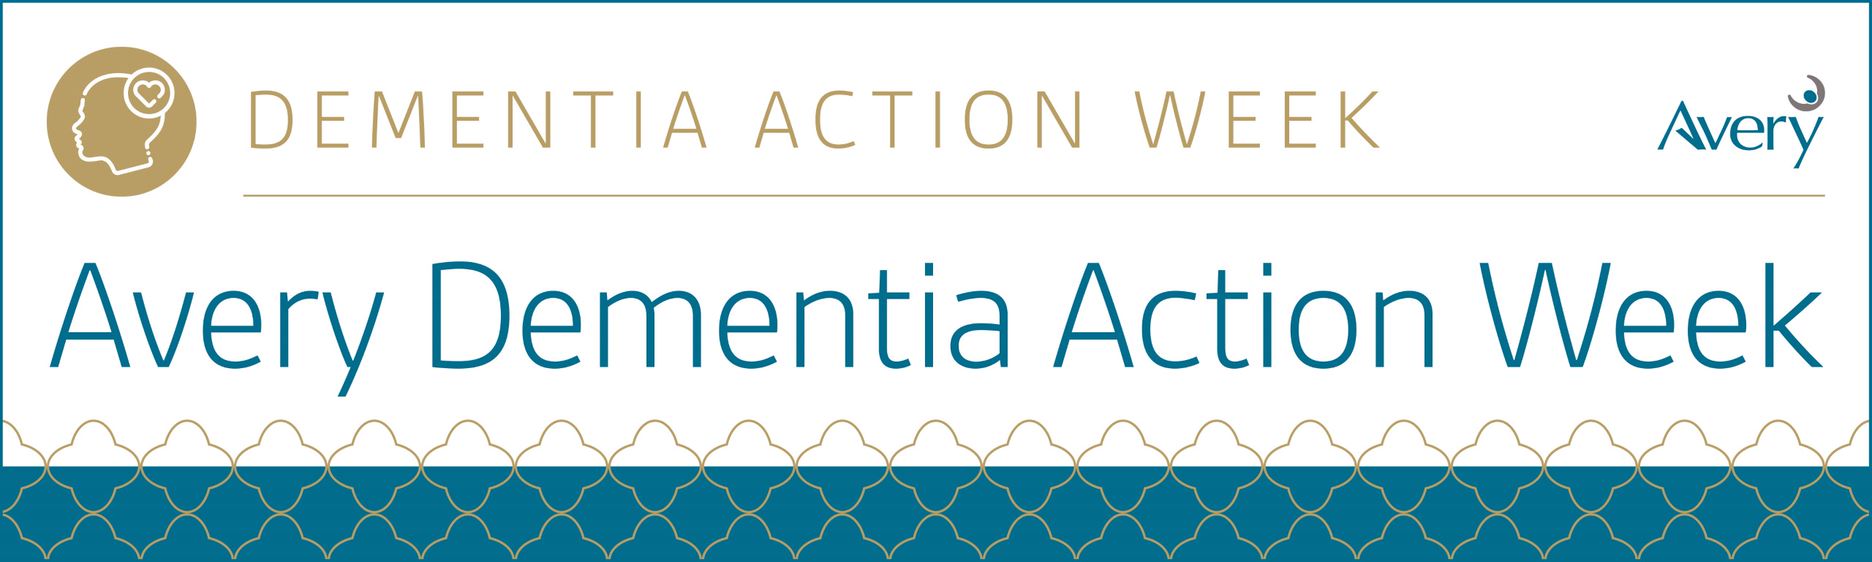 Dementia Action Banner